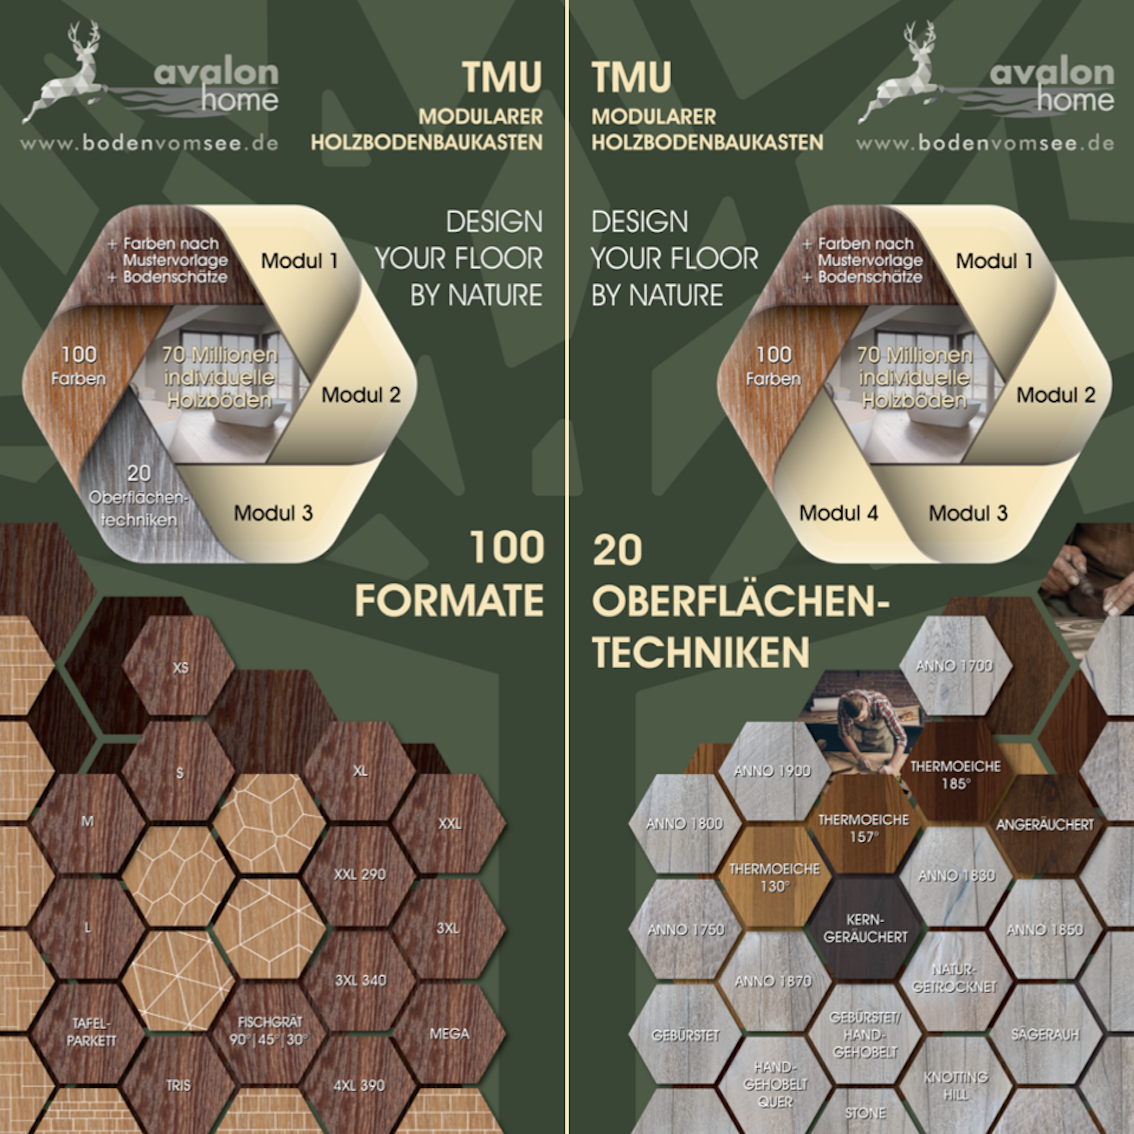 TMU - Modularer Holzbodenbaukasten Modul 3 + 4